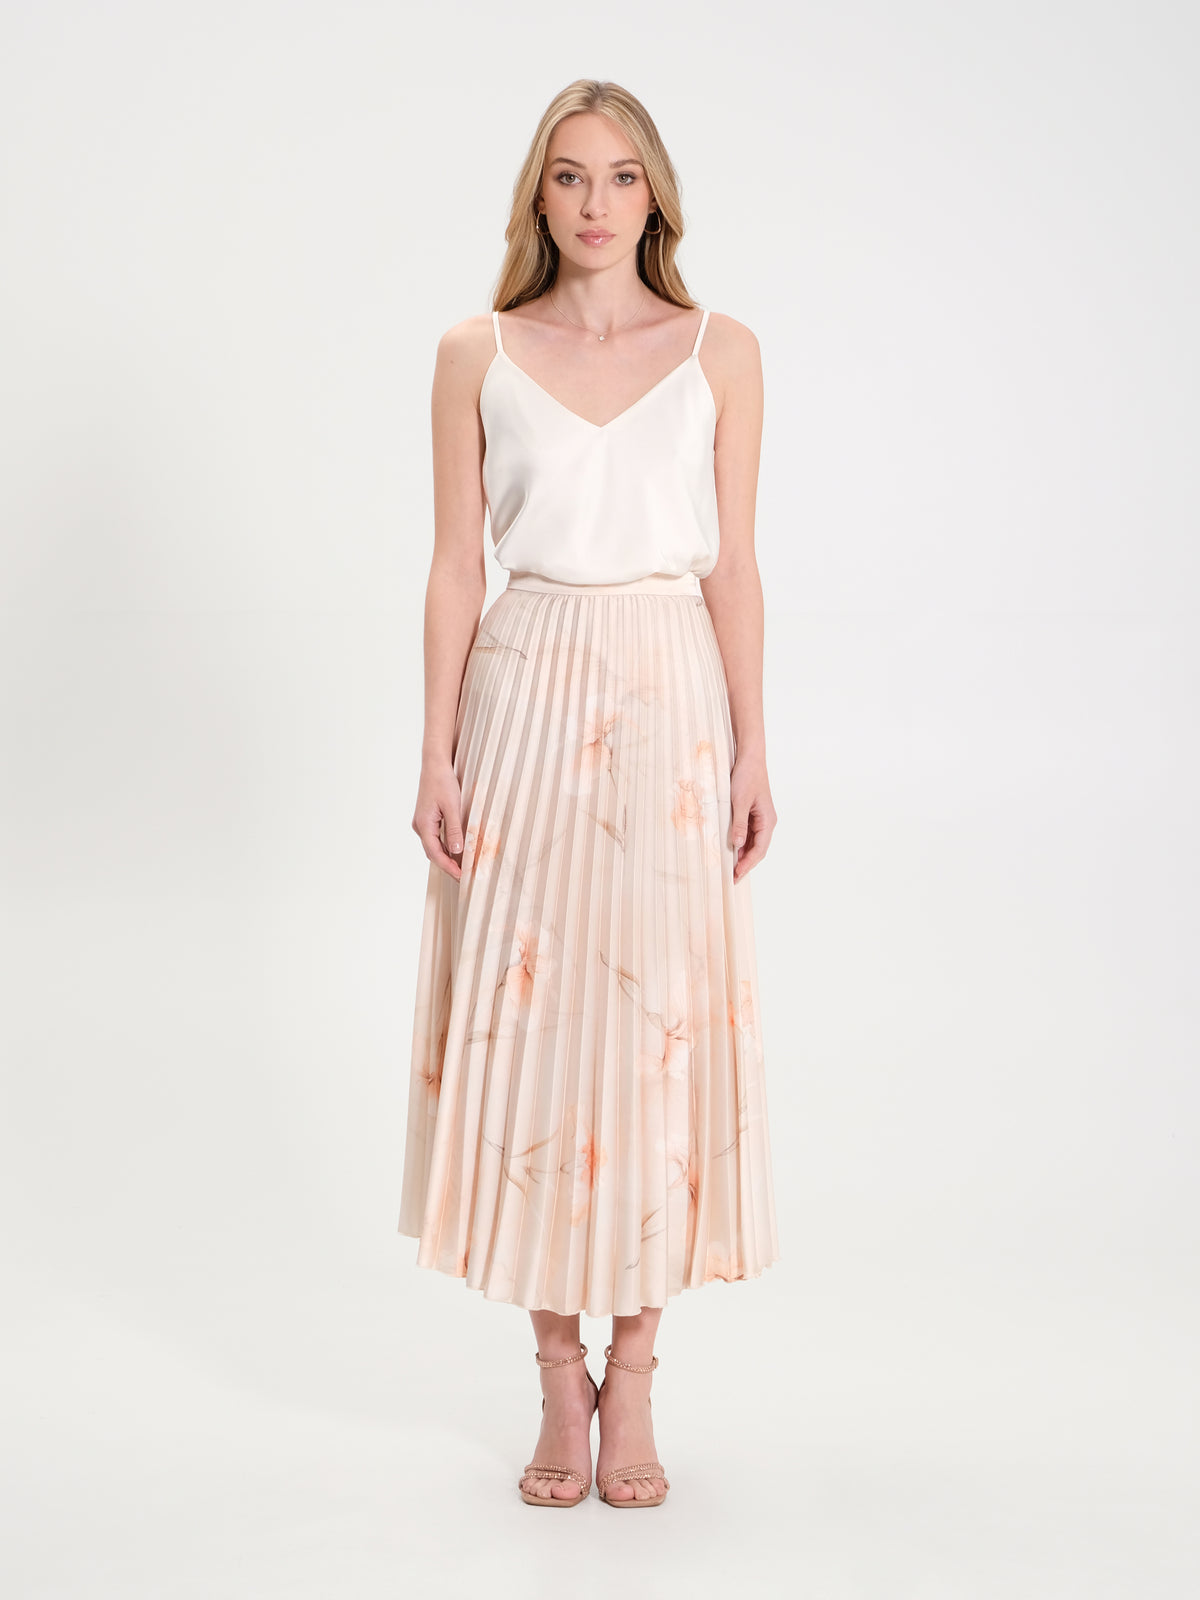 Pleated Floral-Print Skirt